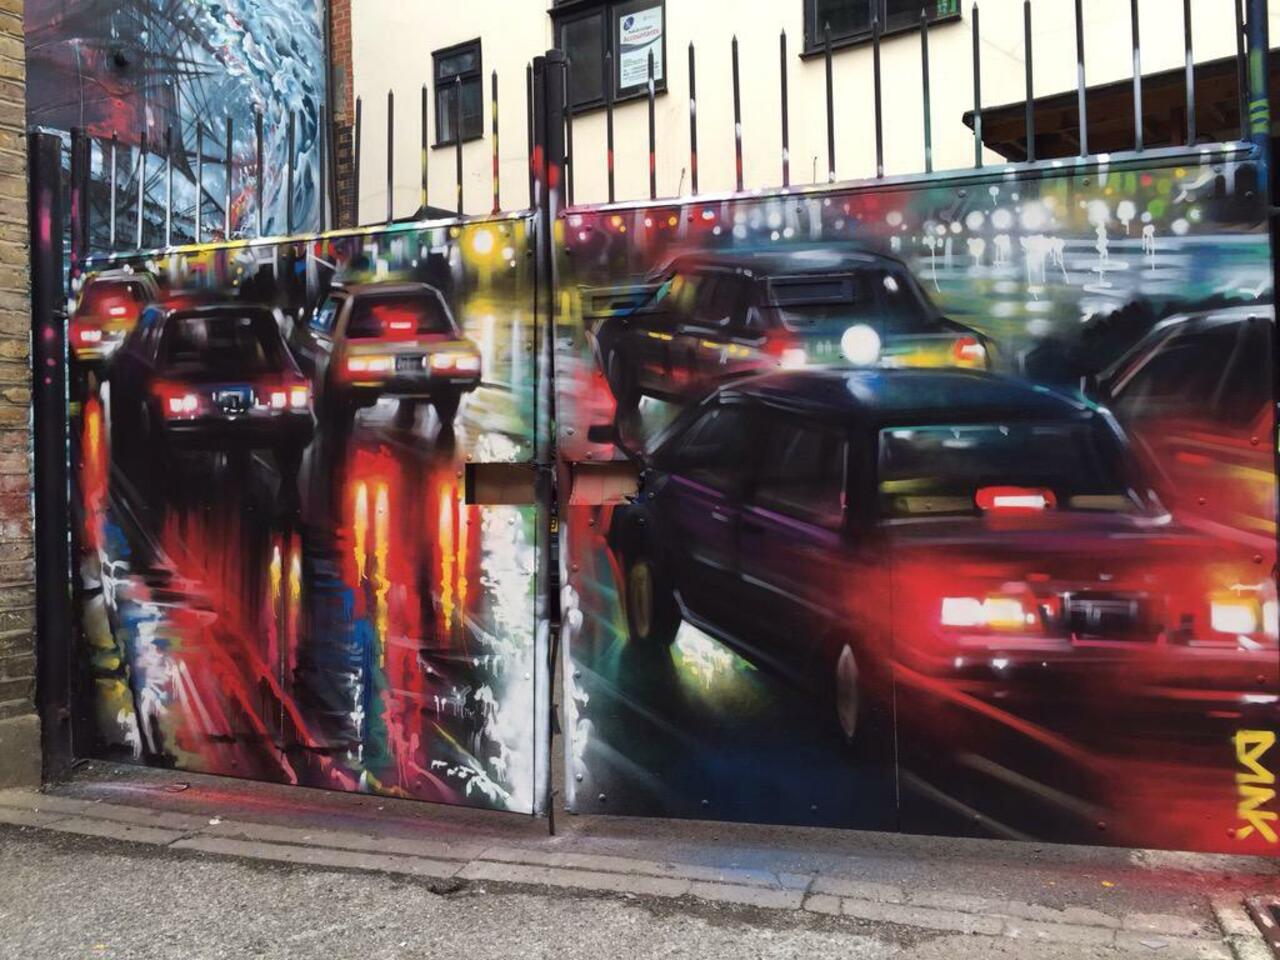 New Street Art by DanKitchener in Brick Lane London 

#art #graffiti #mural #streetart http://t.co/pmH7x3ZEYl